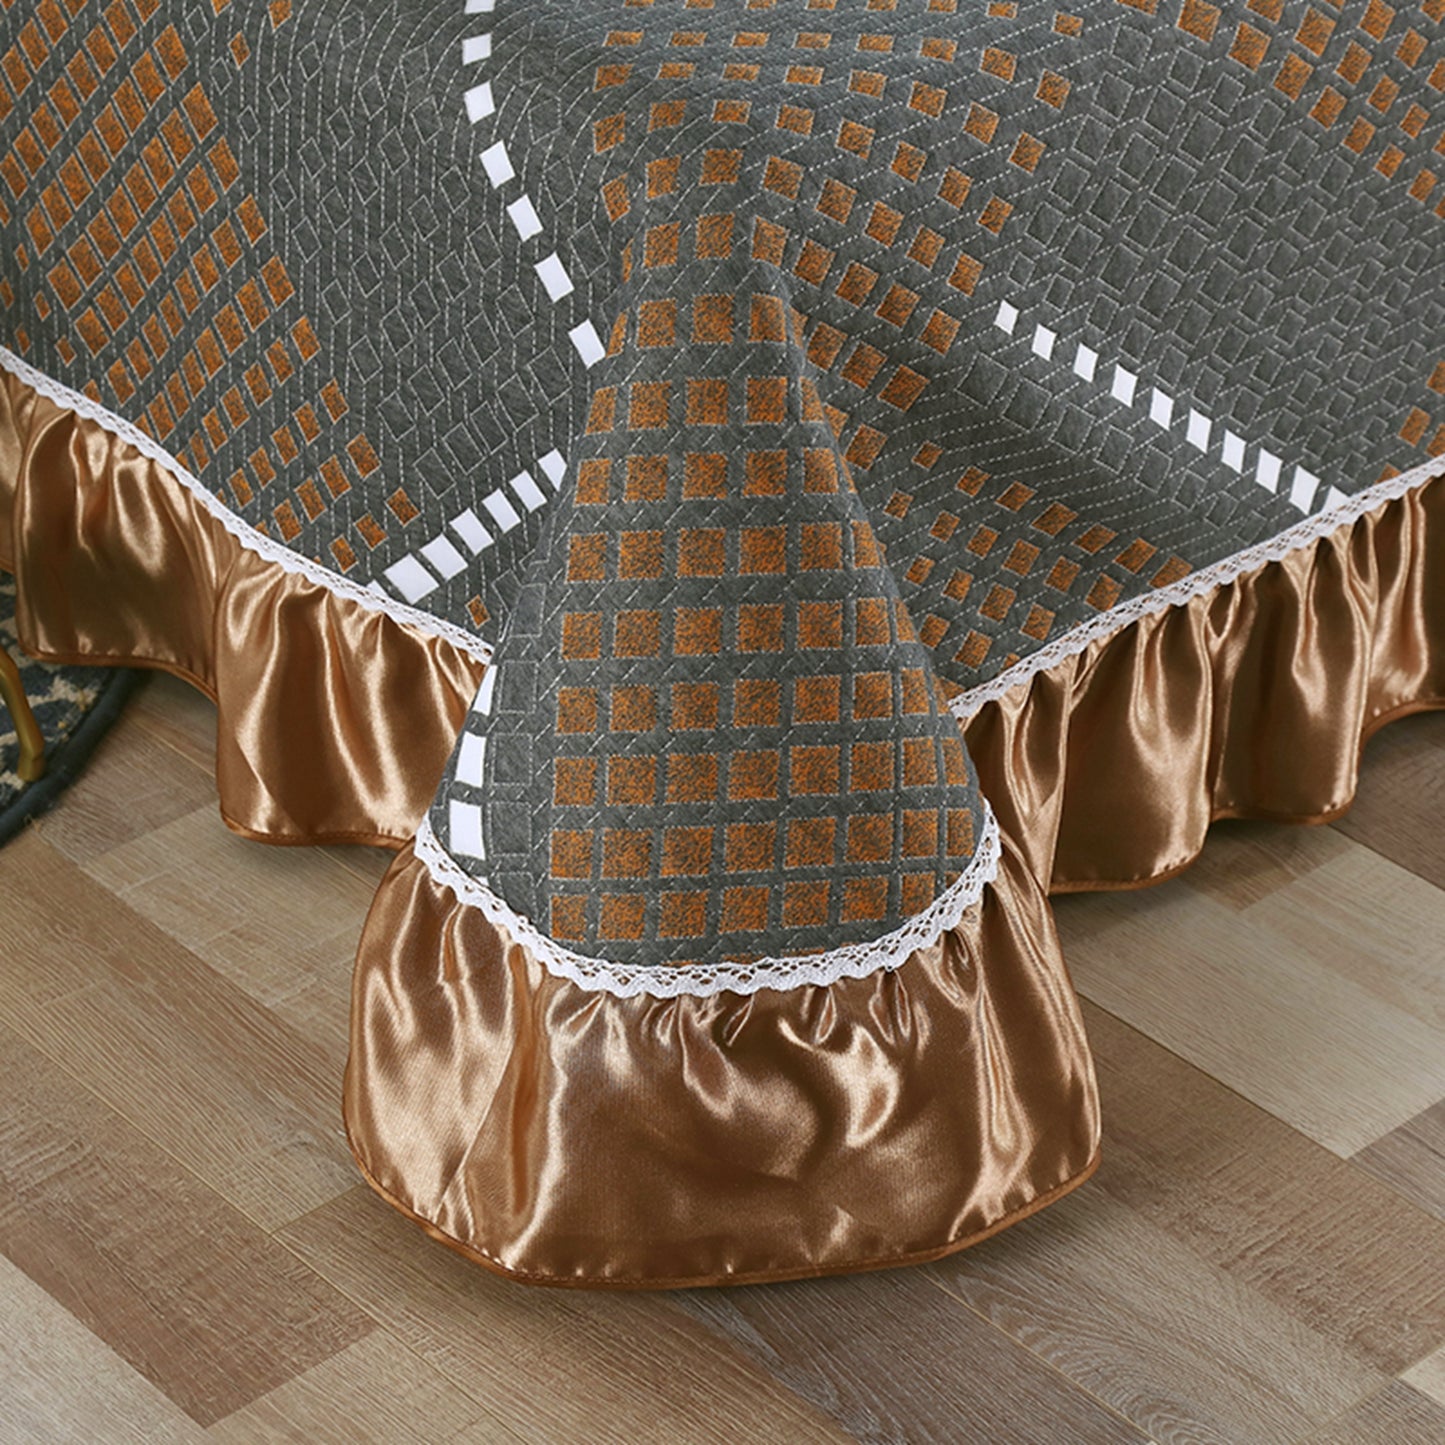 Knit Jacquard Pleats 3 Pieces Quilt Set with 2 Pillowcases